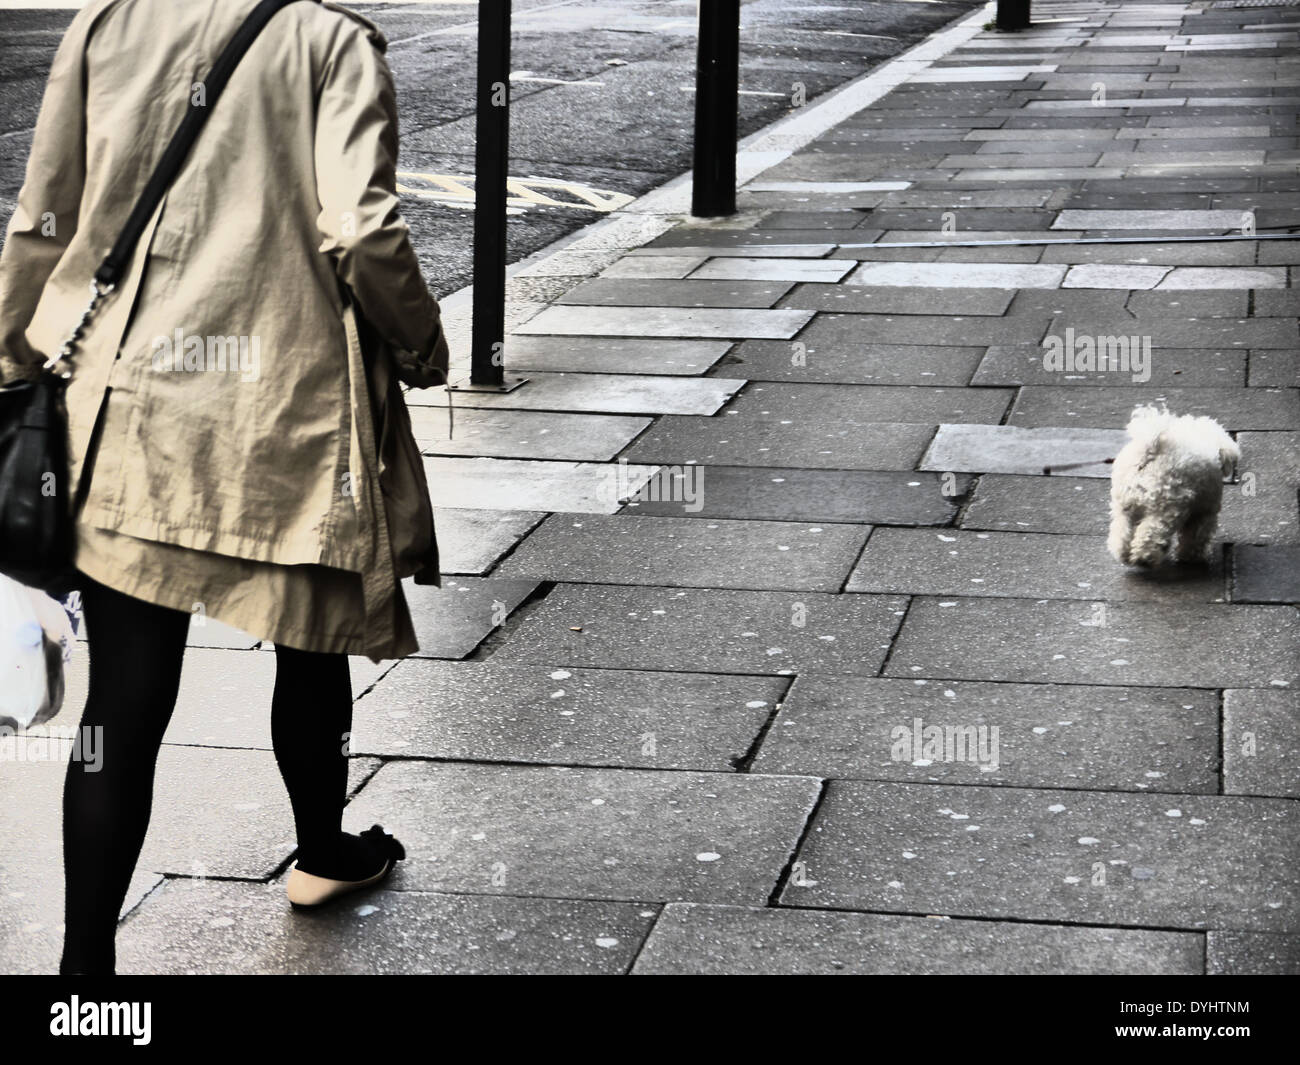 Création / image photographique artistique de woman walking dog, Newcastle upon Tyne, England, UK Banque D'Images